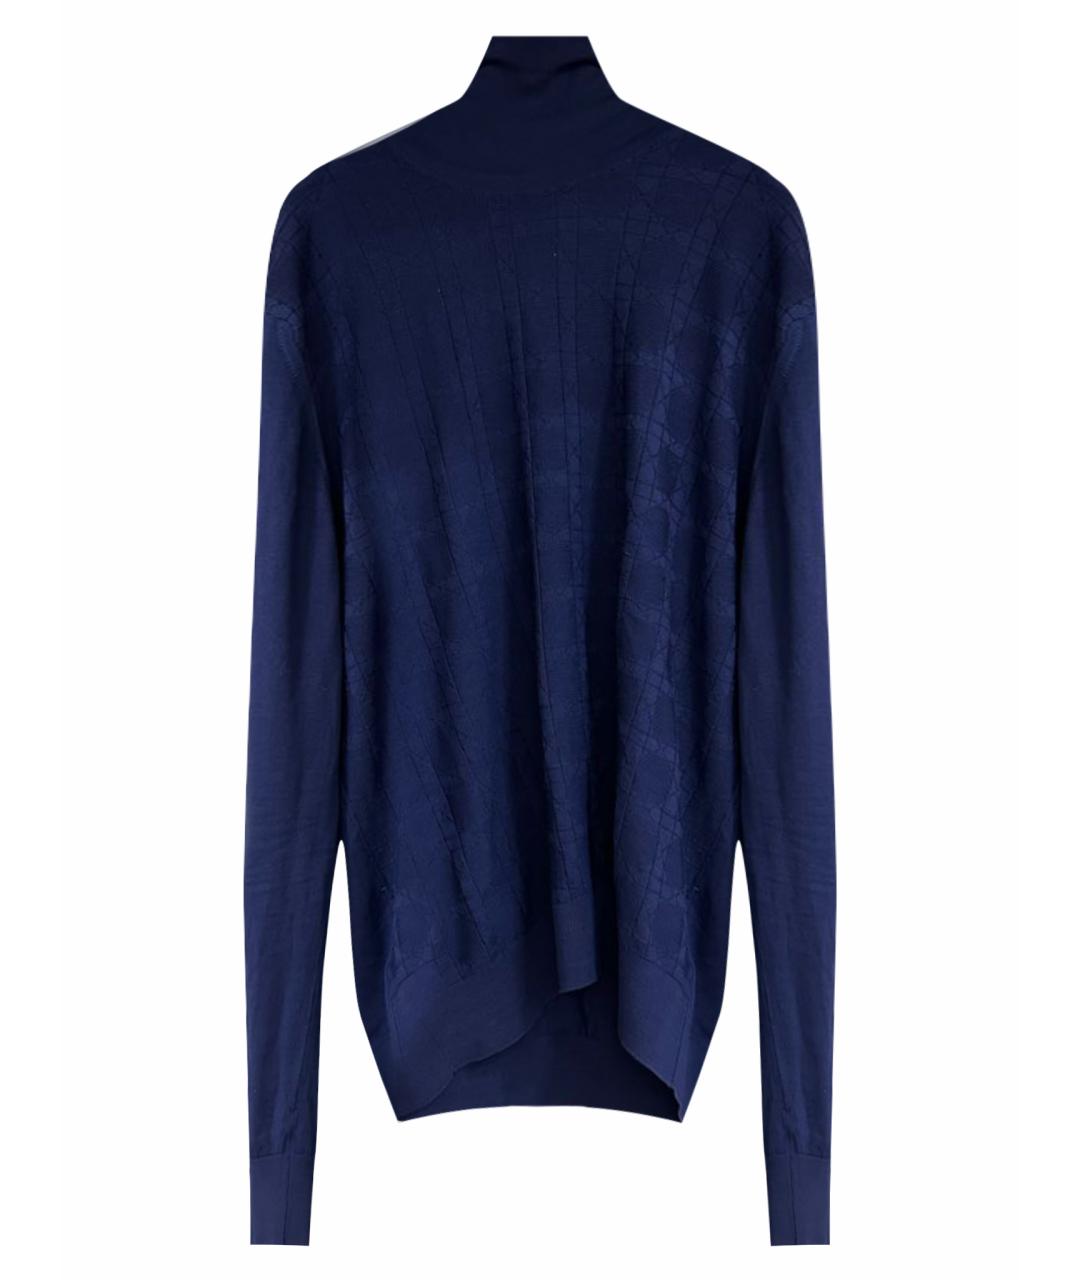 SVEVO Темно-синий шерстяной джемпер / свитер, фото 1